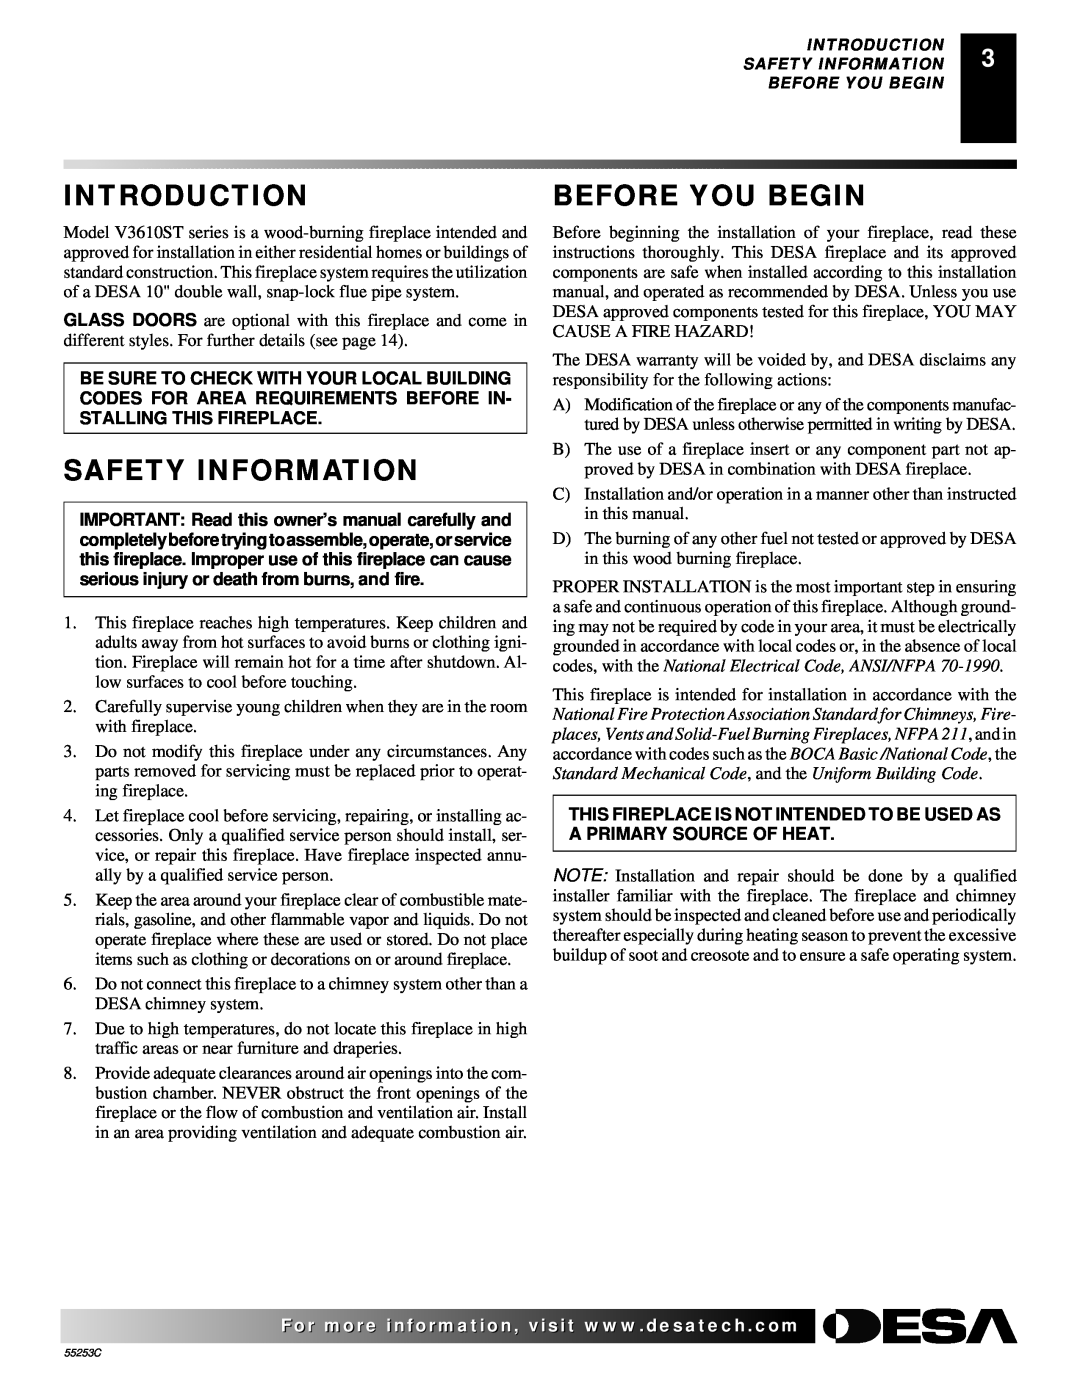 Desa V3610ST manual Introduction, Safety Information, Before You Begin 